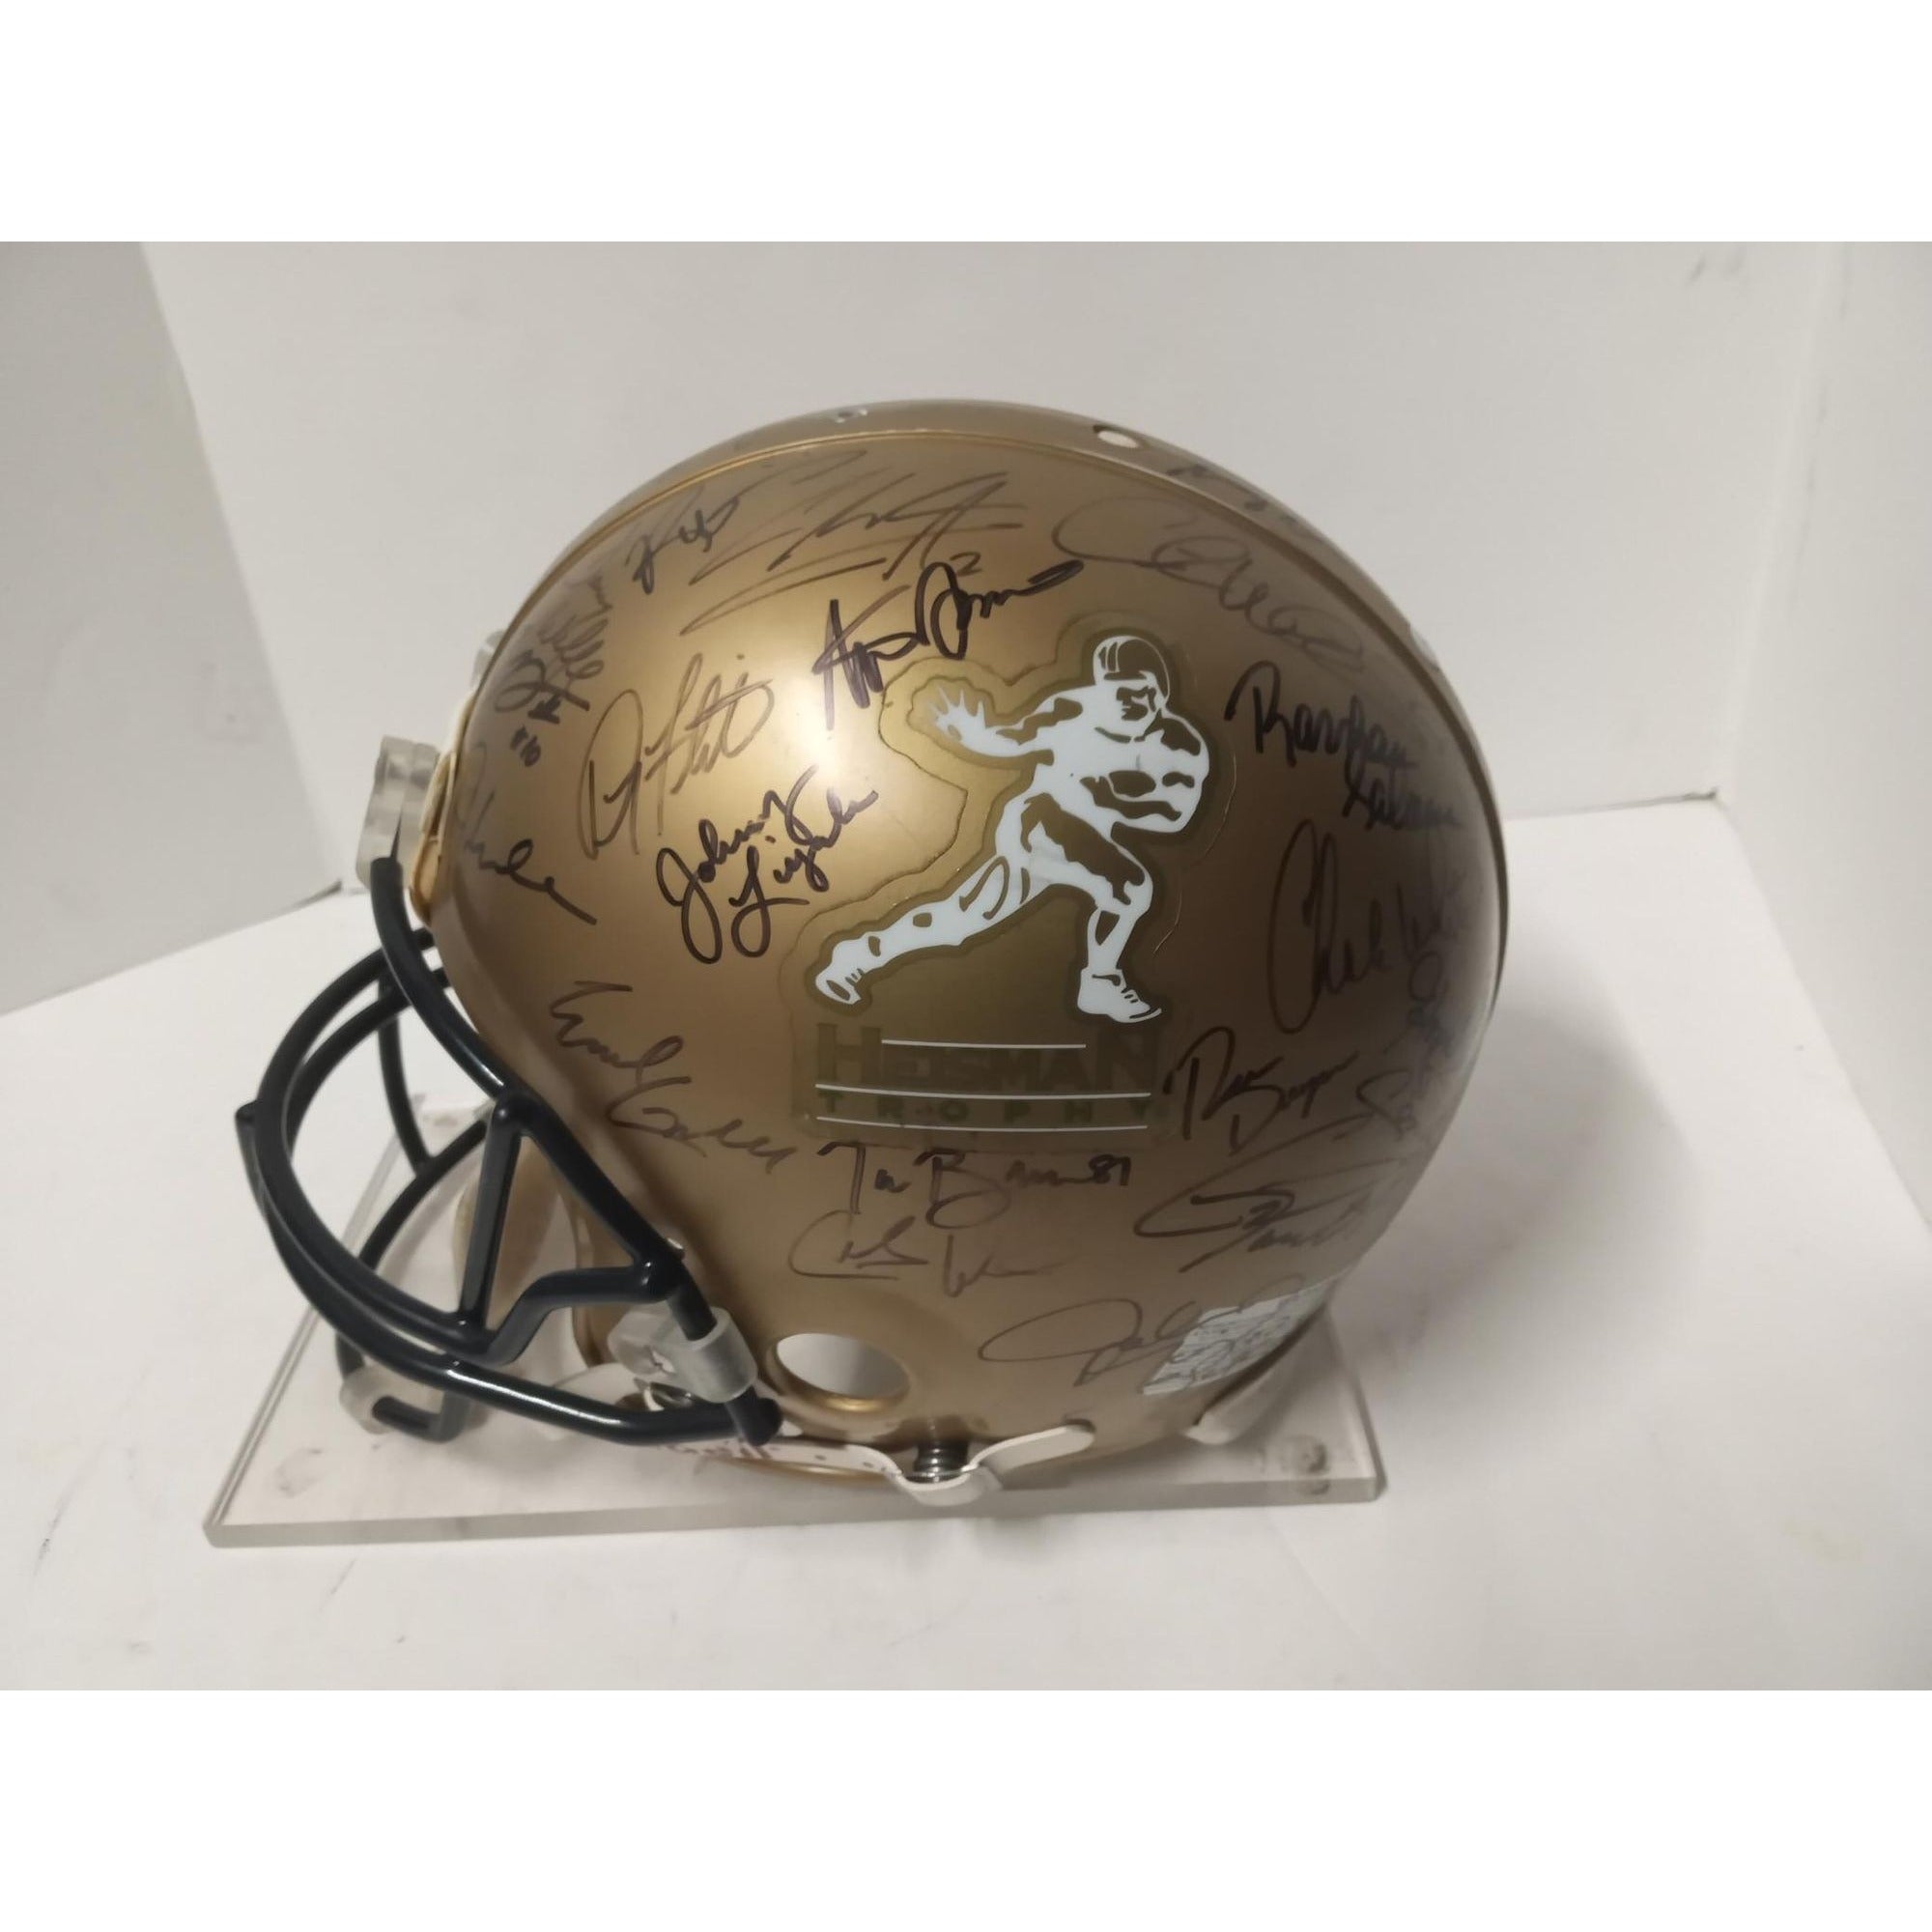 40 Heisman Trophy award winners Roger Staubach Barry Sanders Bo Jackson Riddell pro model helmet signed with free case